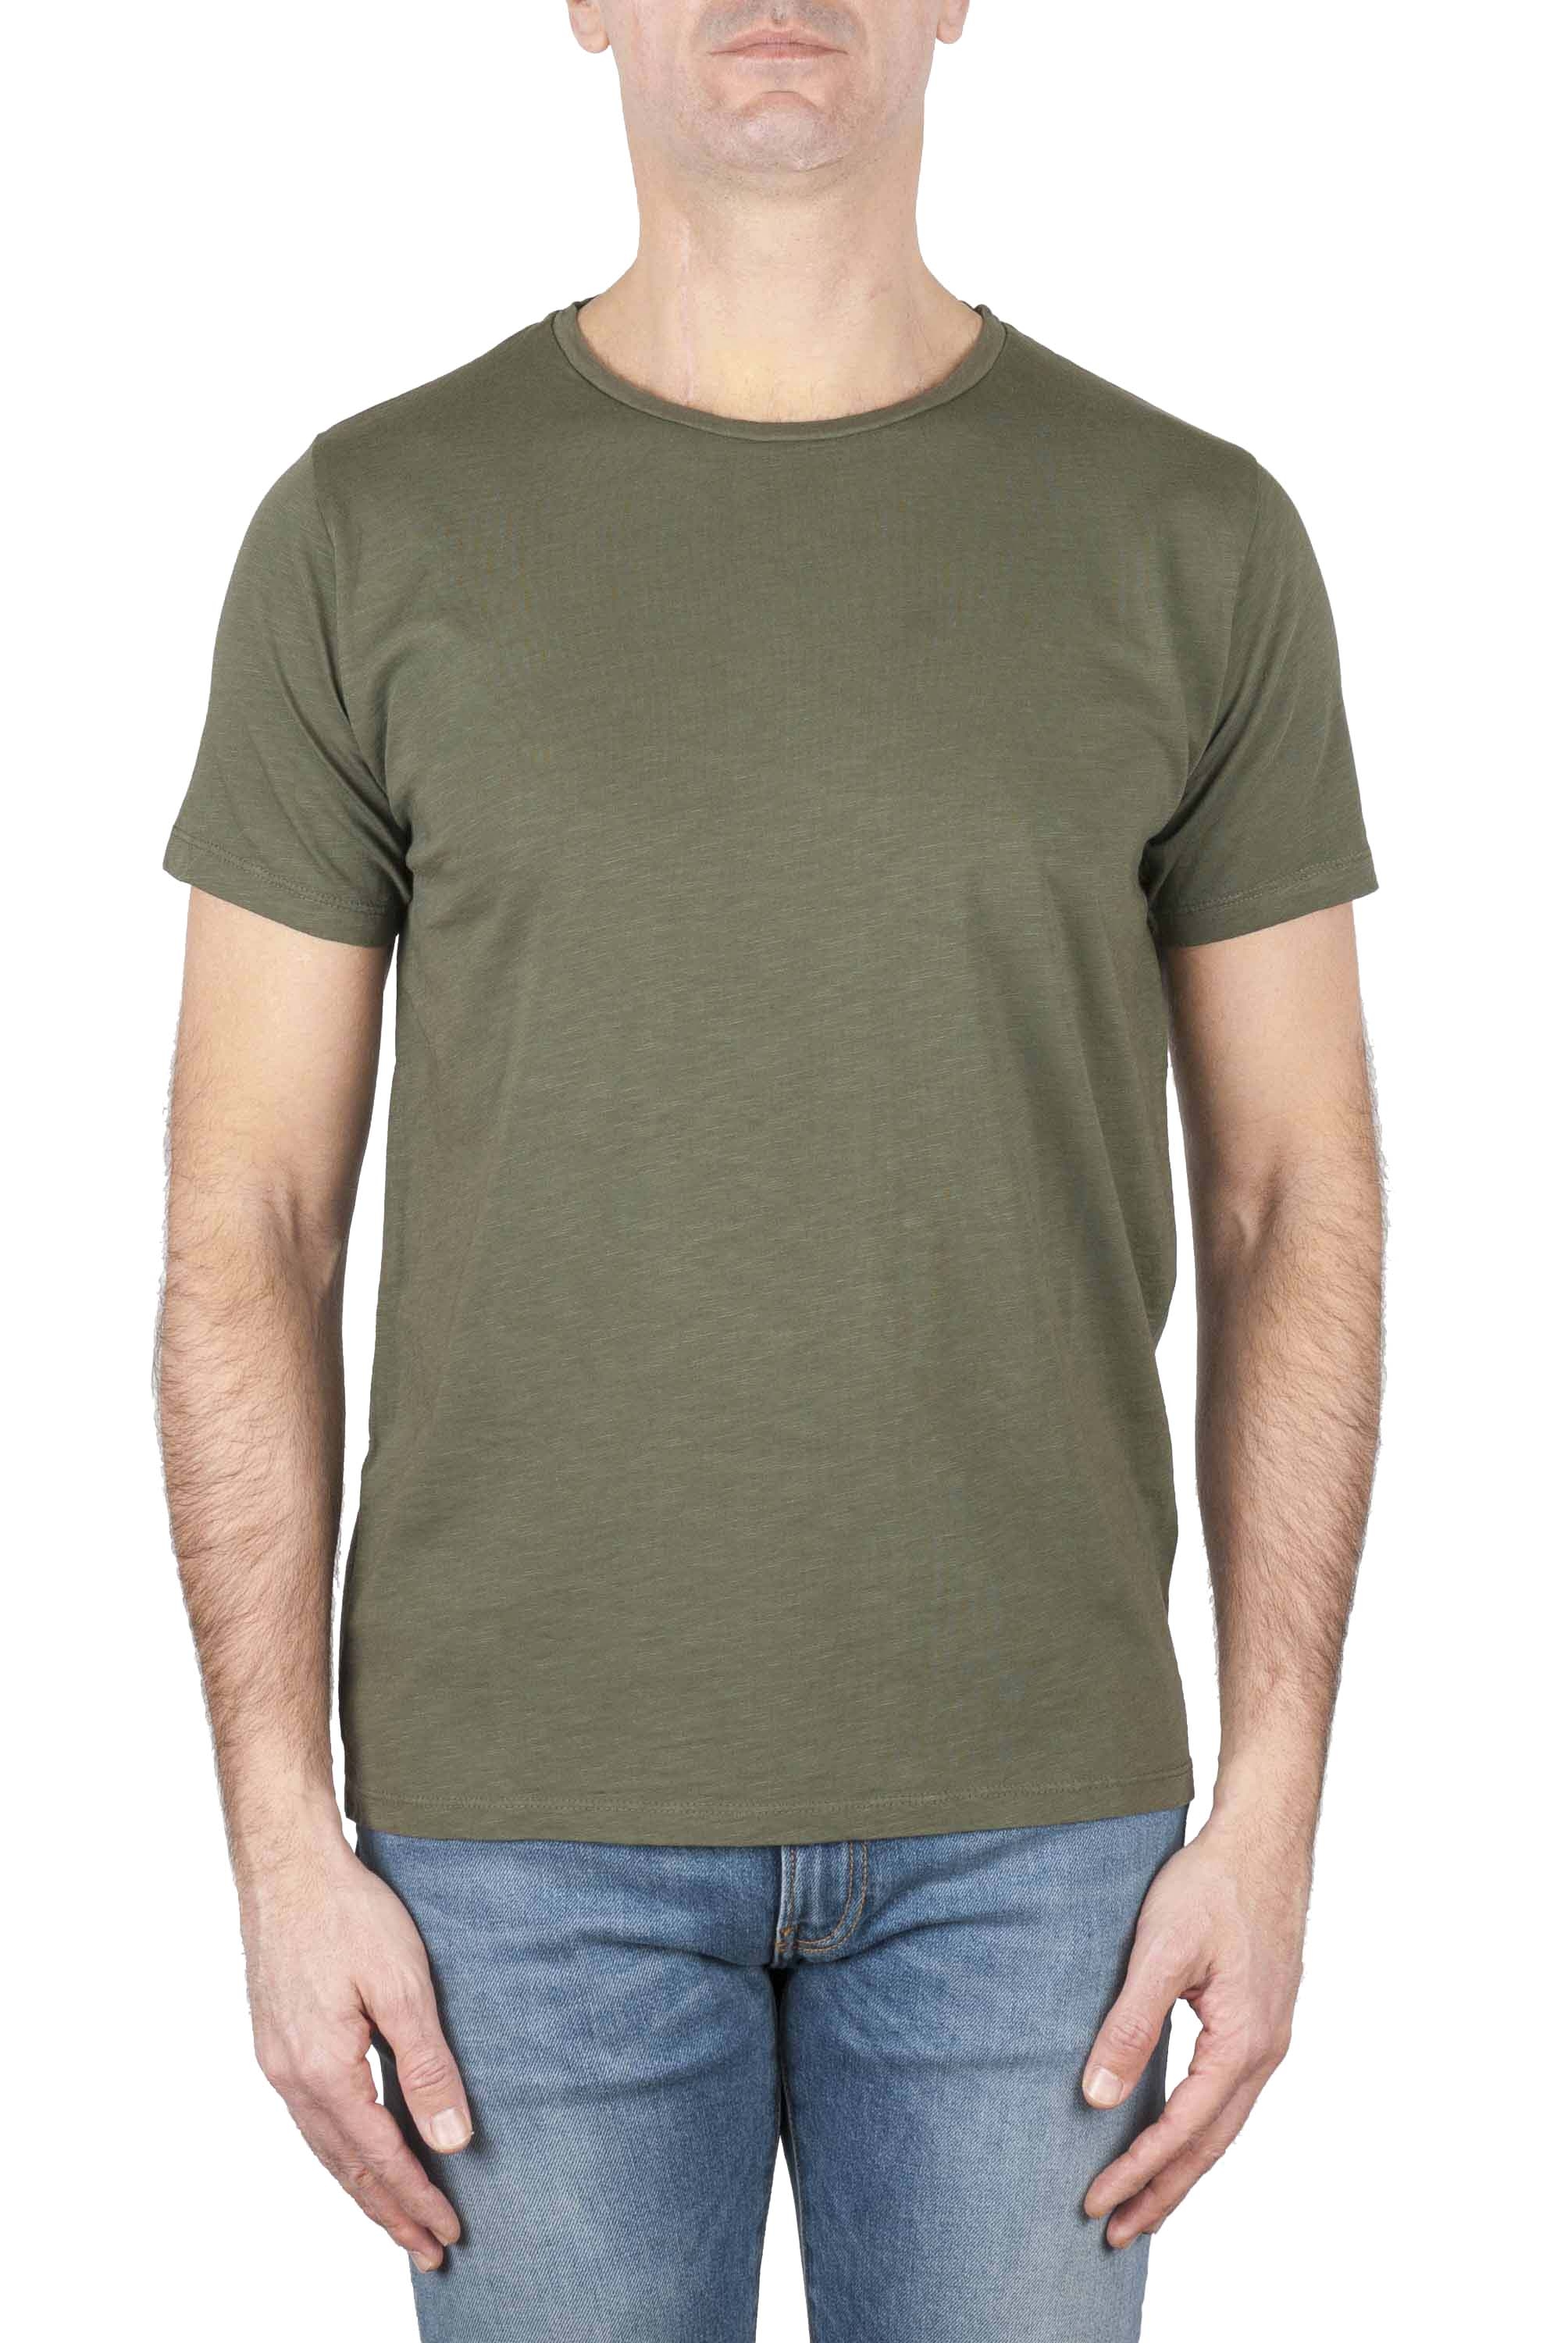 SBU 01645_19AW T-shirt girocollo aperto in cotone fiammato verde 01